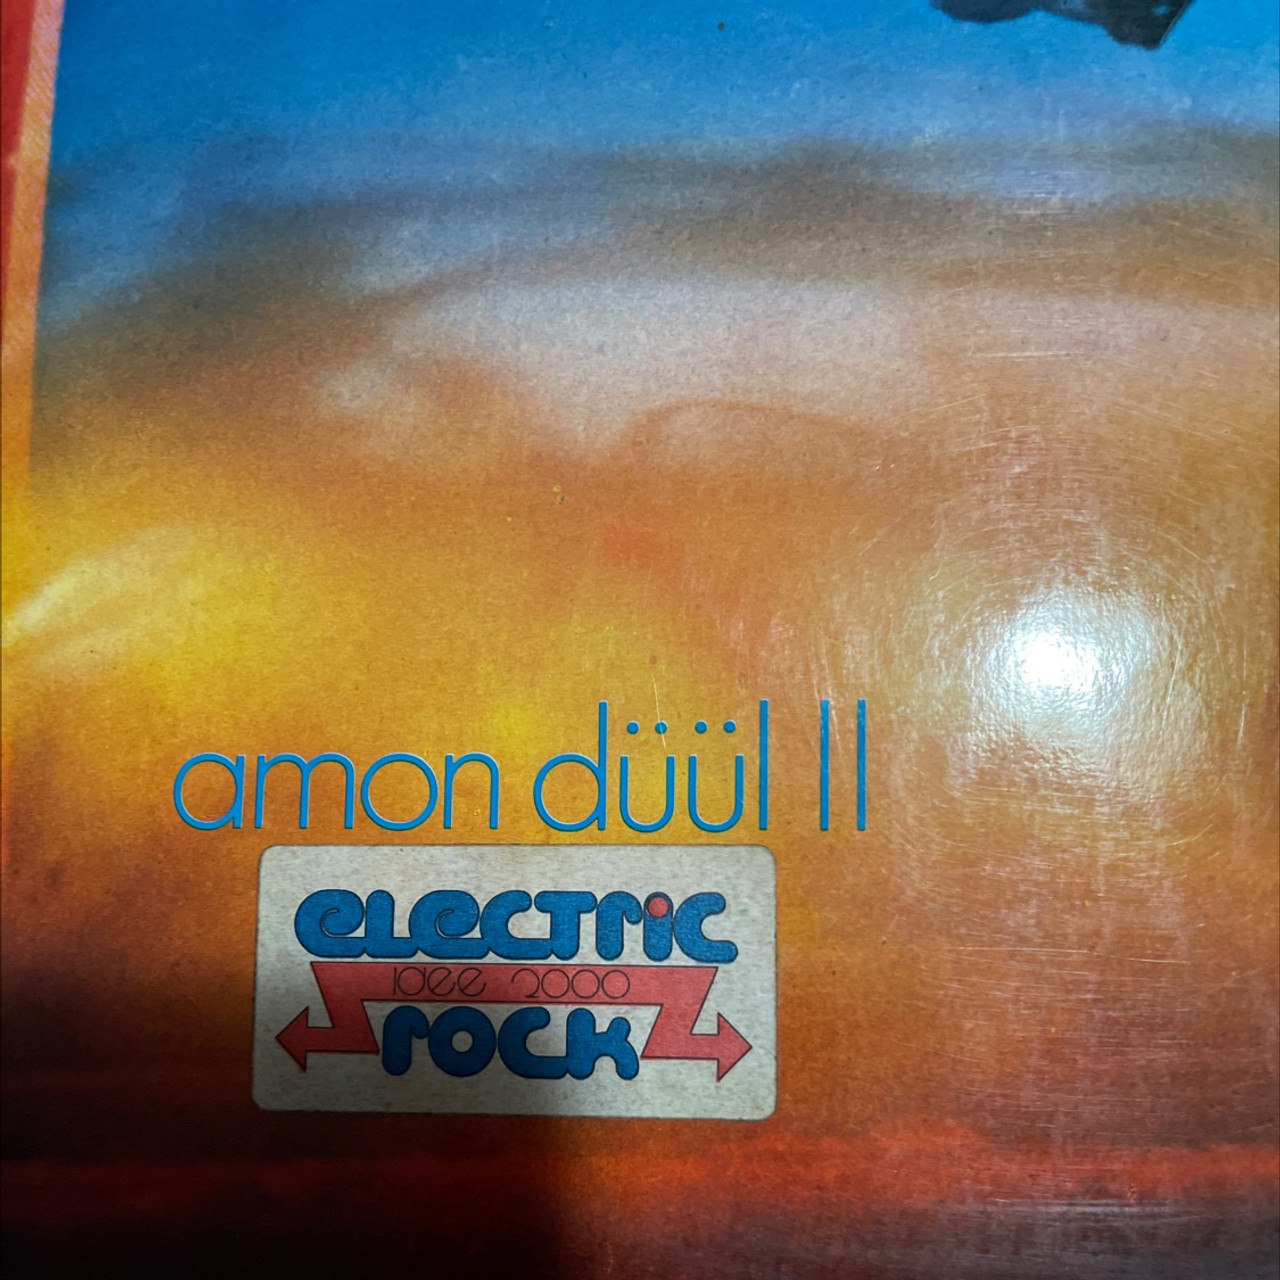 Amon Duul II Yeti Album Cover Sticker